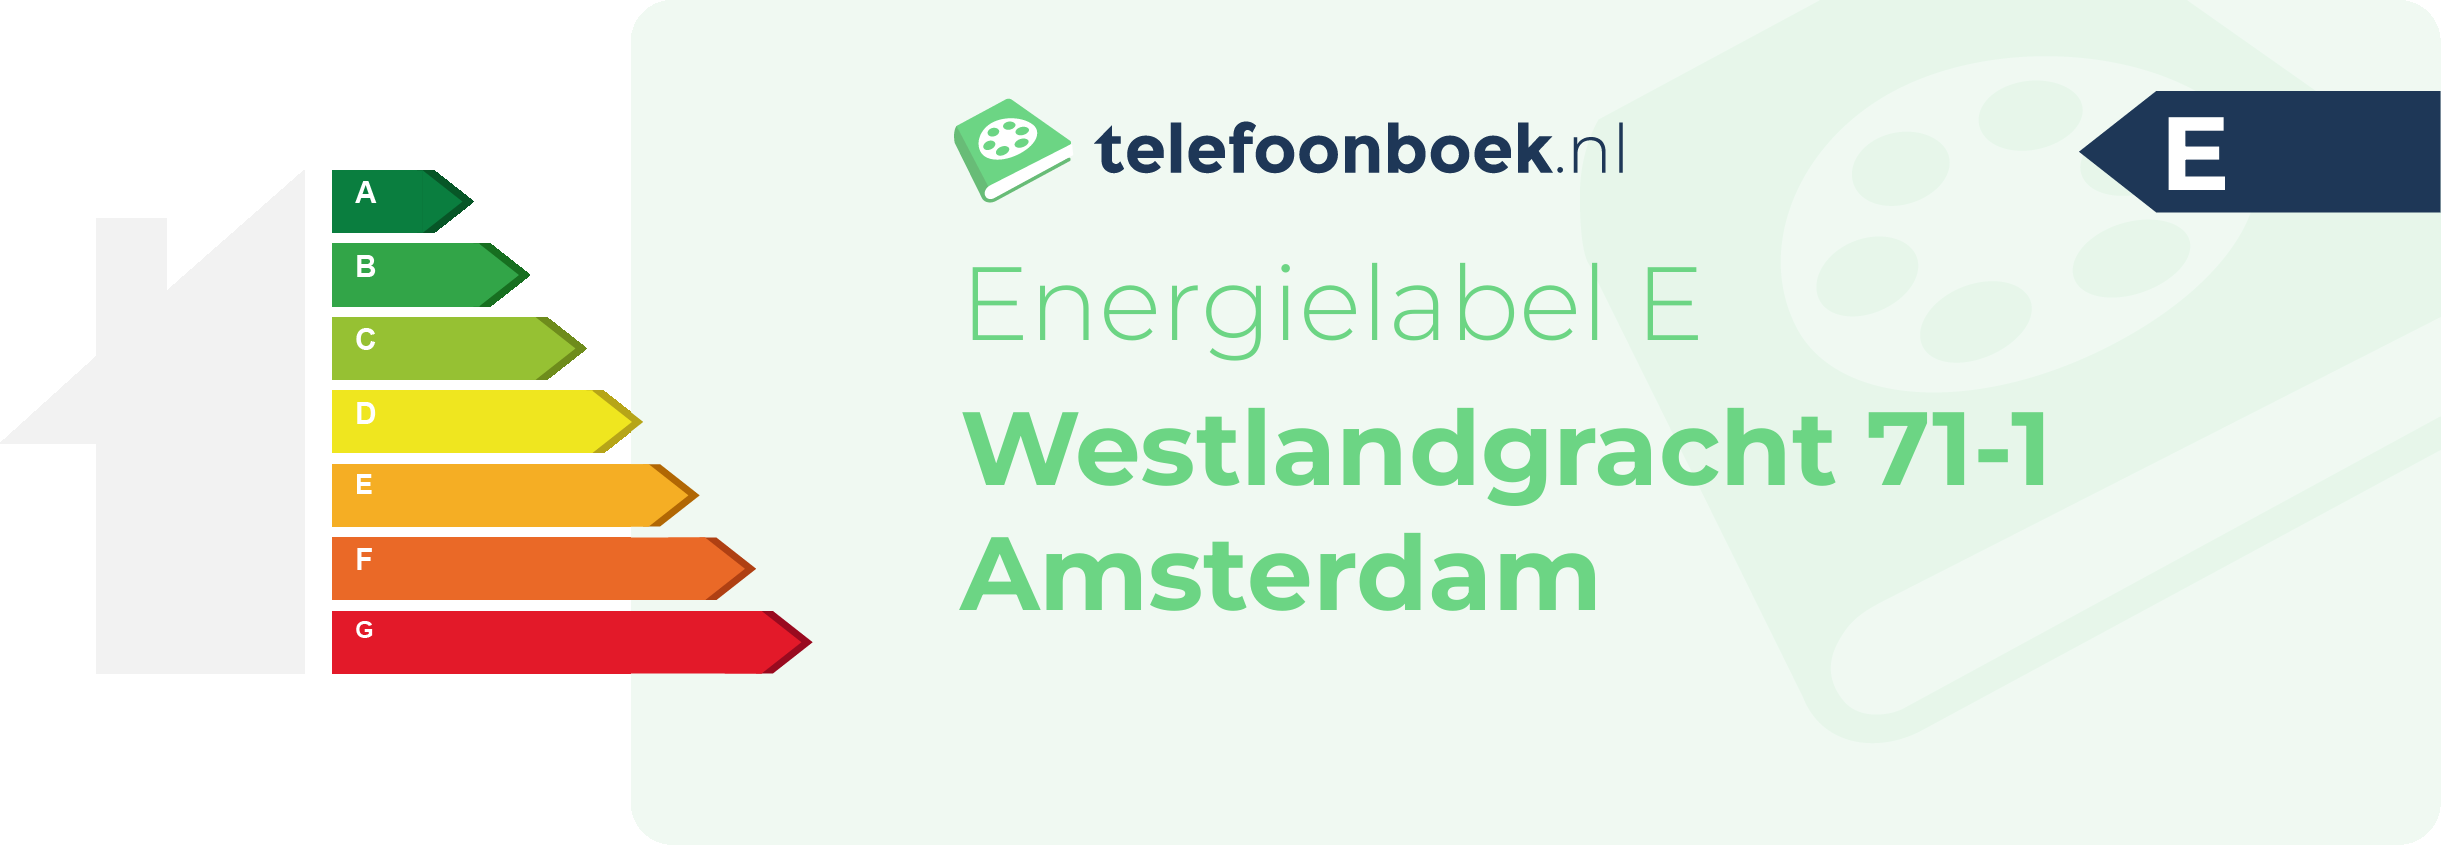 Energielabel Westlandgracht 71-1 Amsterdam